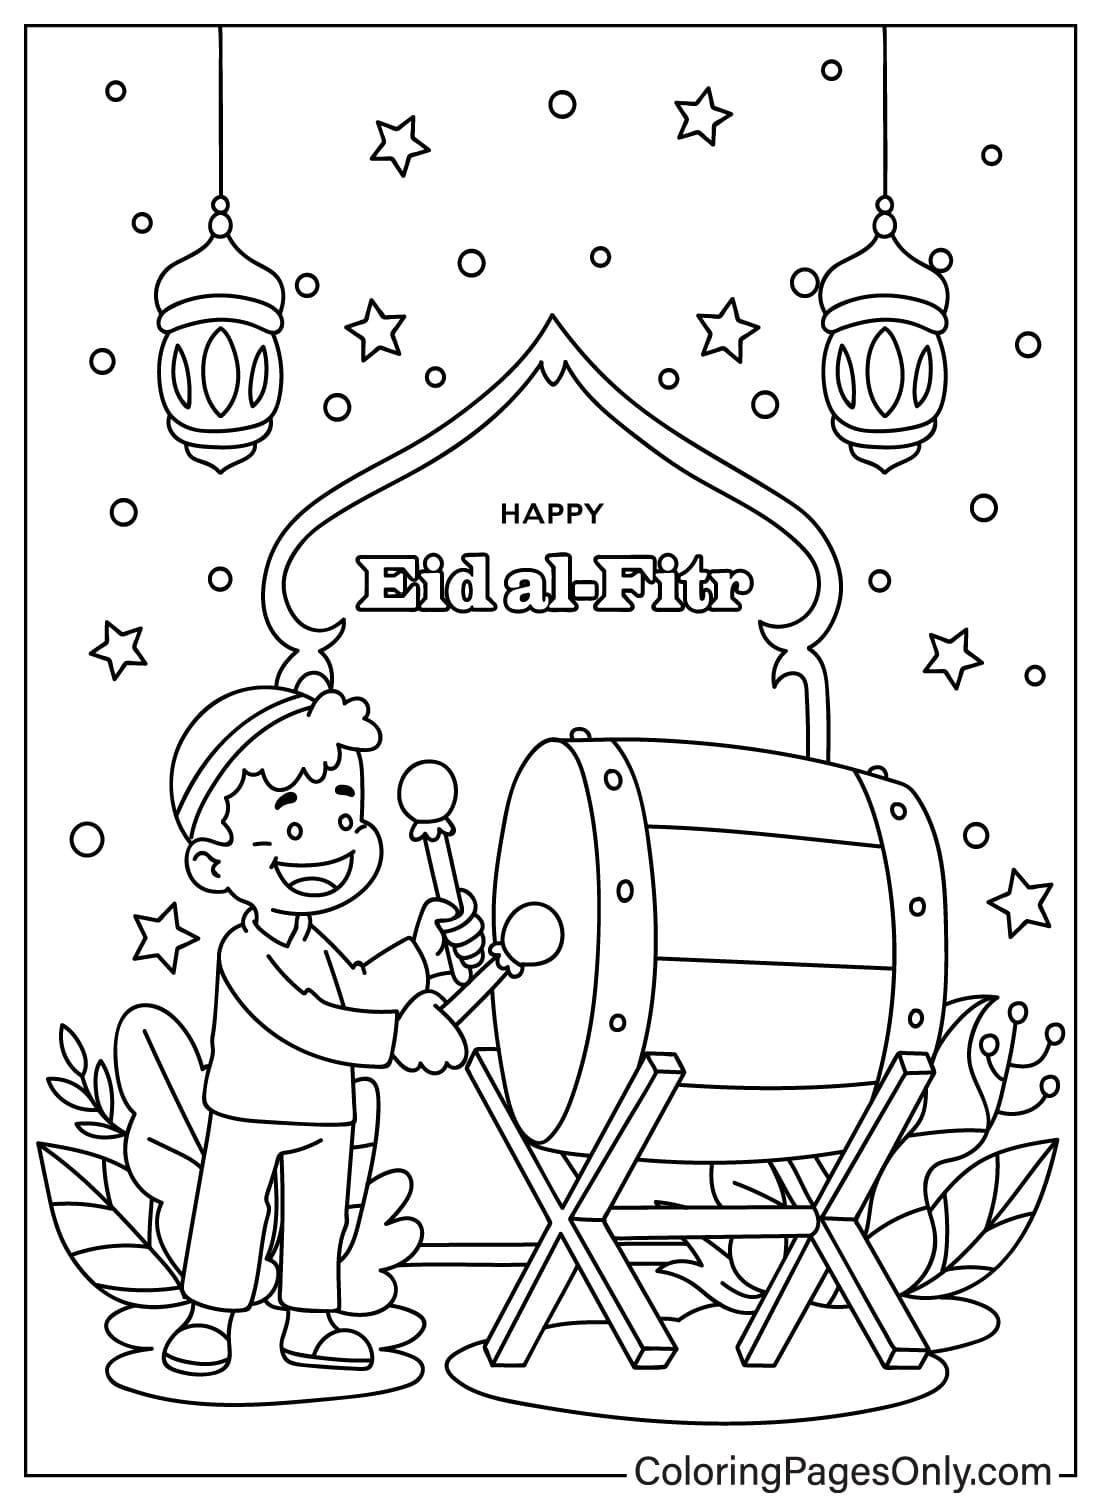 Happy Eid Al-Fitr Coloring Page from Eid Al-Fitr